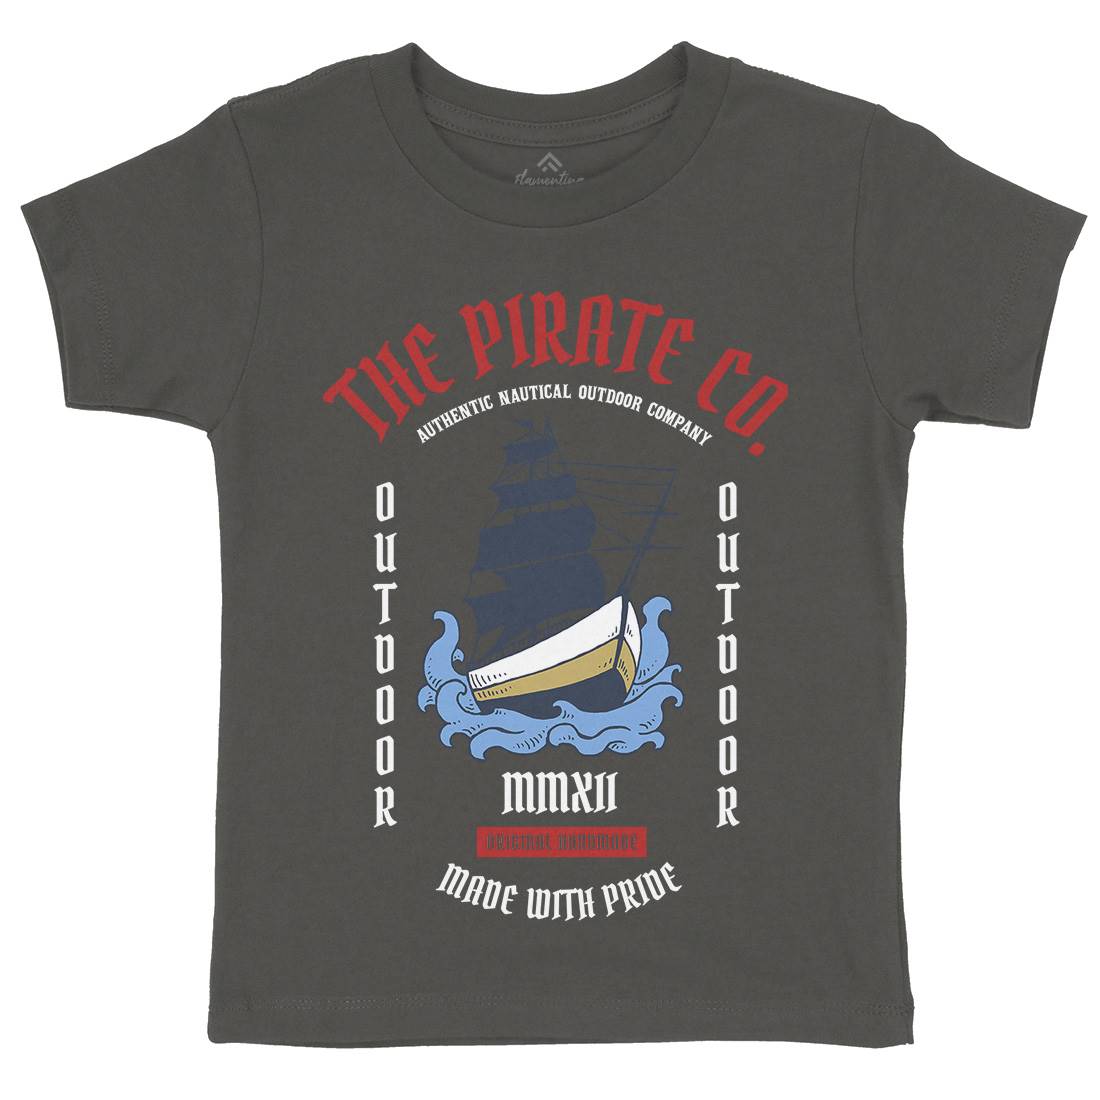 The Ship Kids Organic Crew Neck T-Shirt Navy C790